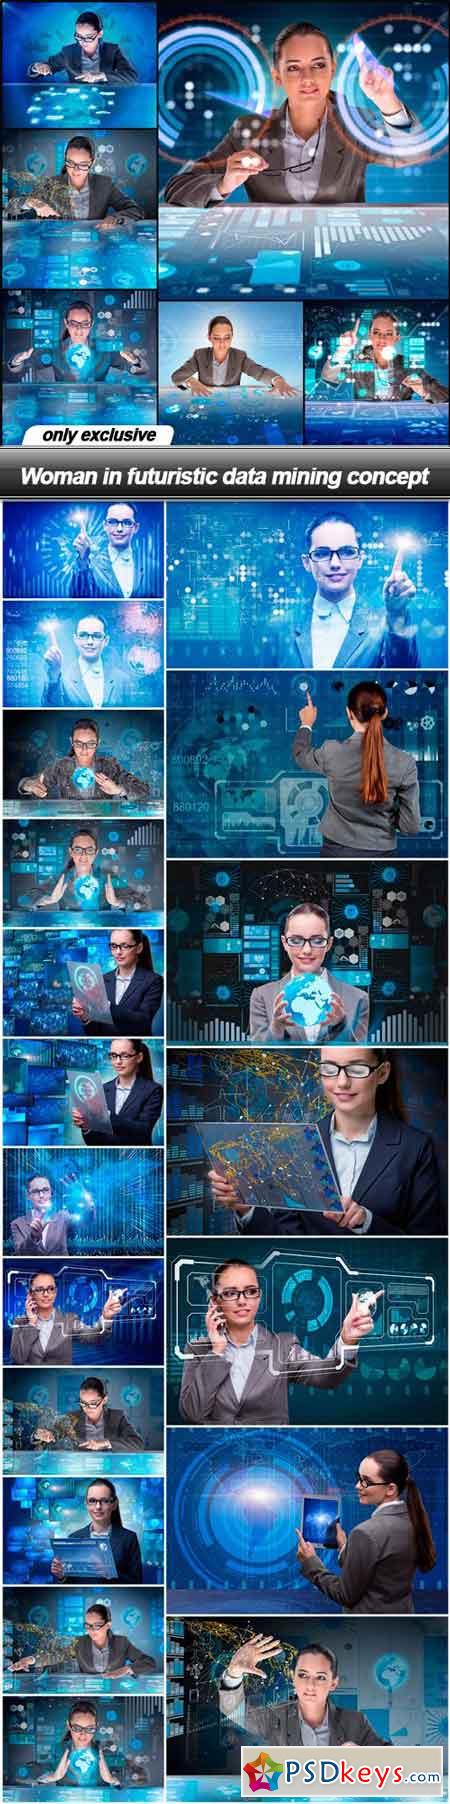 Woman in futuristic data mining concept - 25 UHQ JPEG